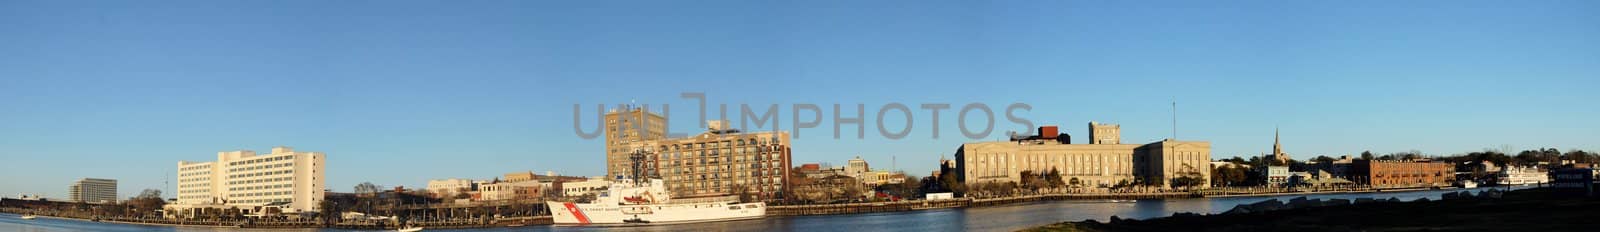 Wilmington view by northwoodsphoto